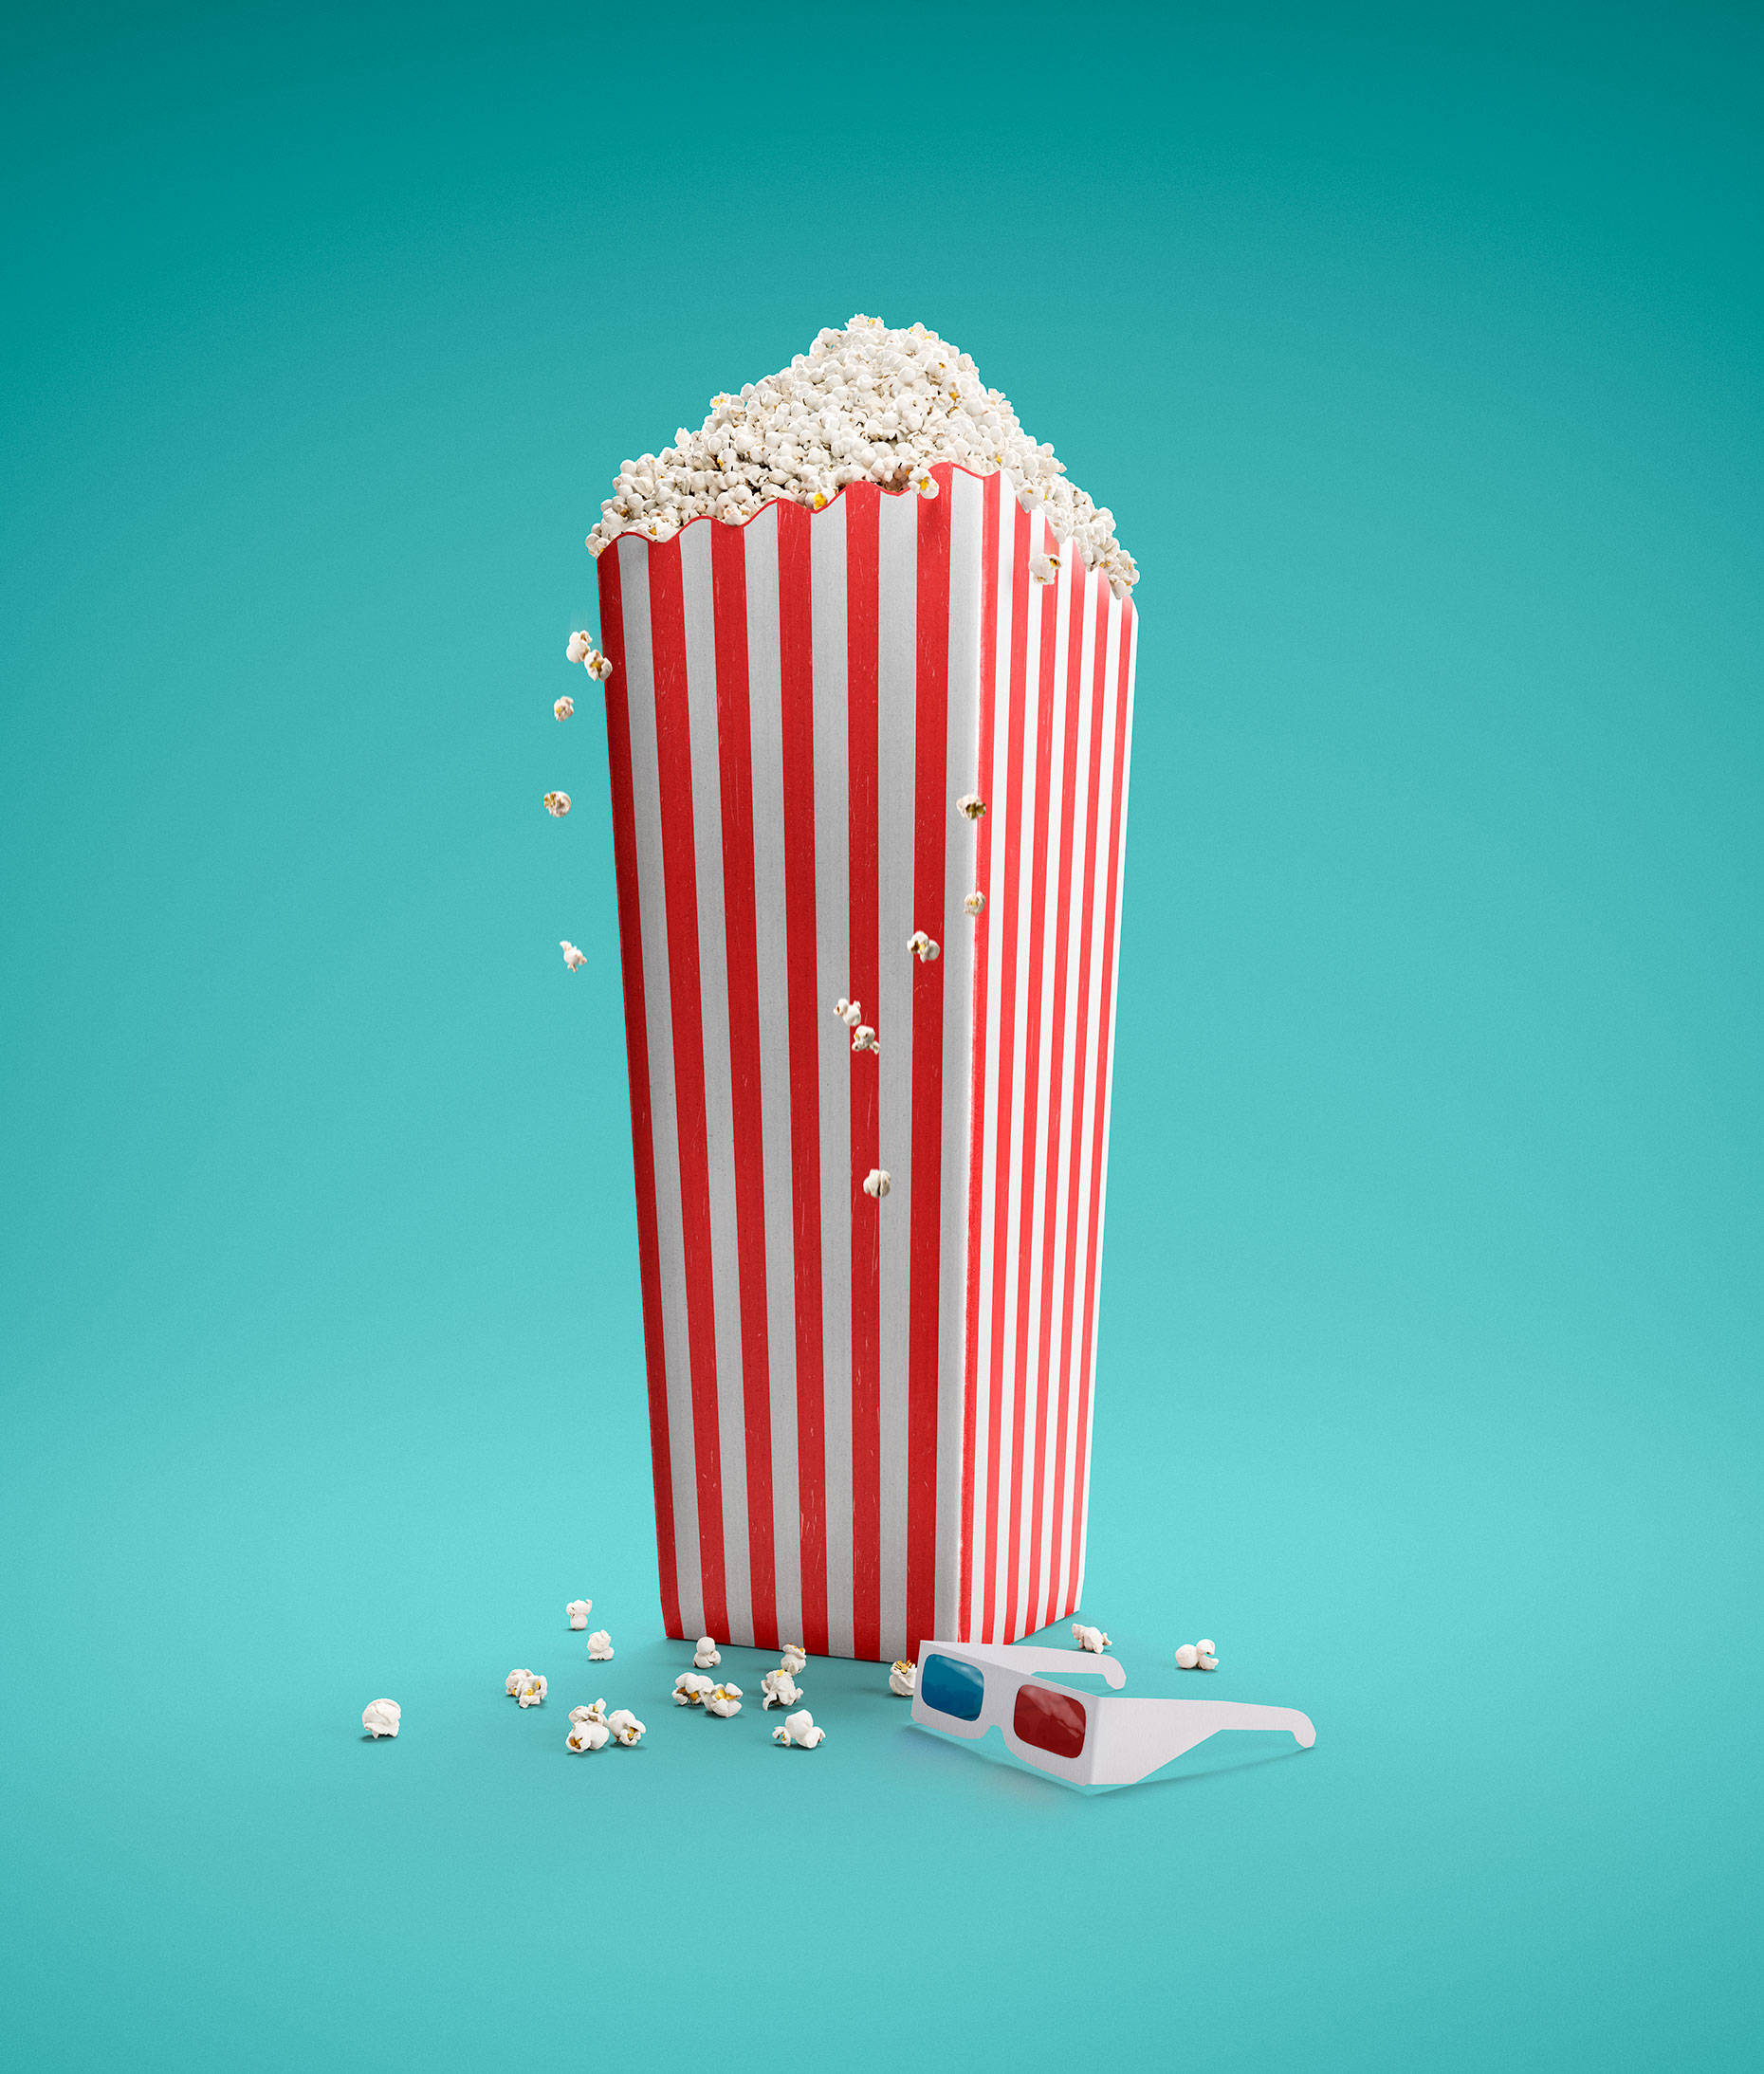 SaskTel Popcorn